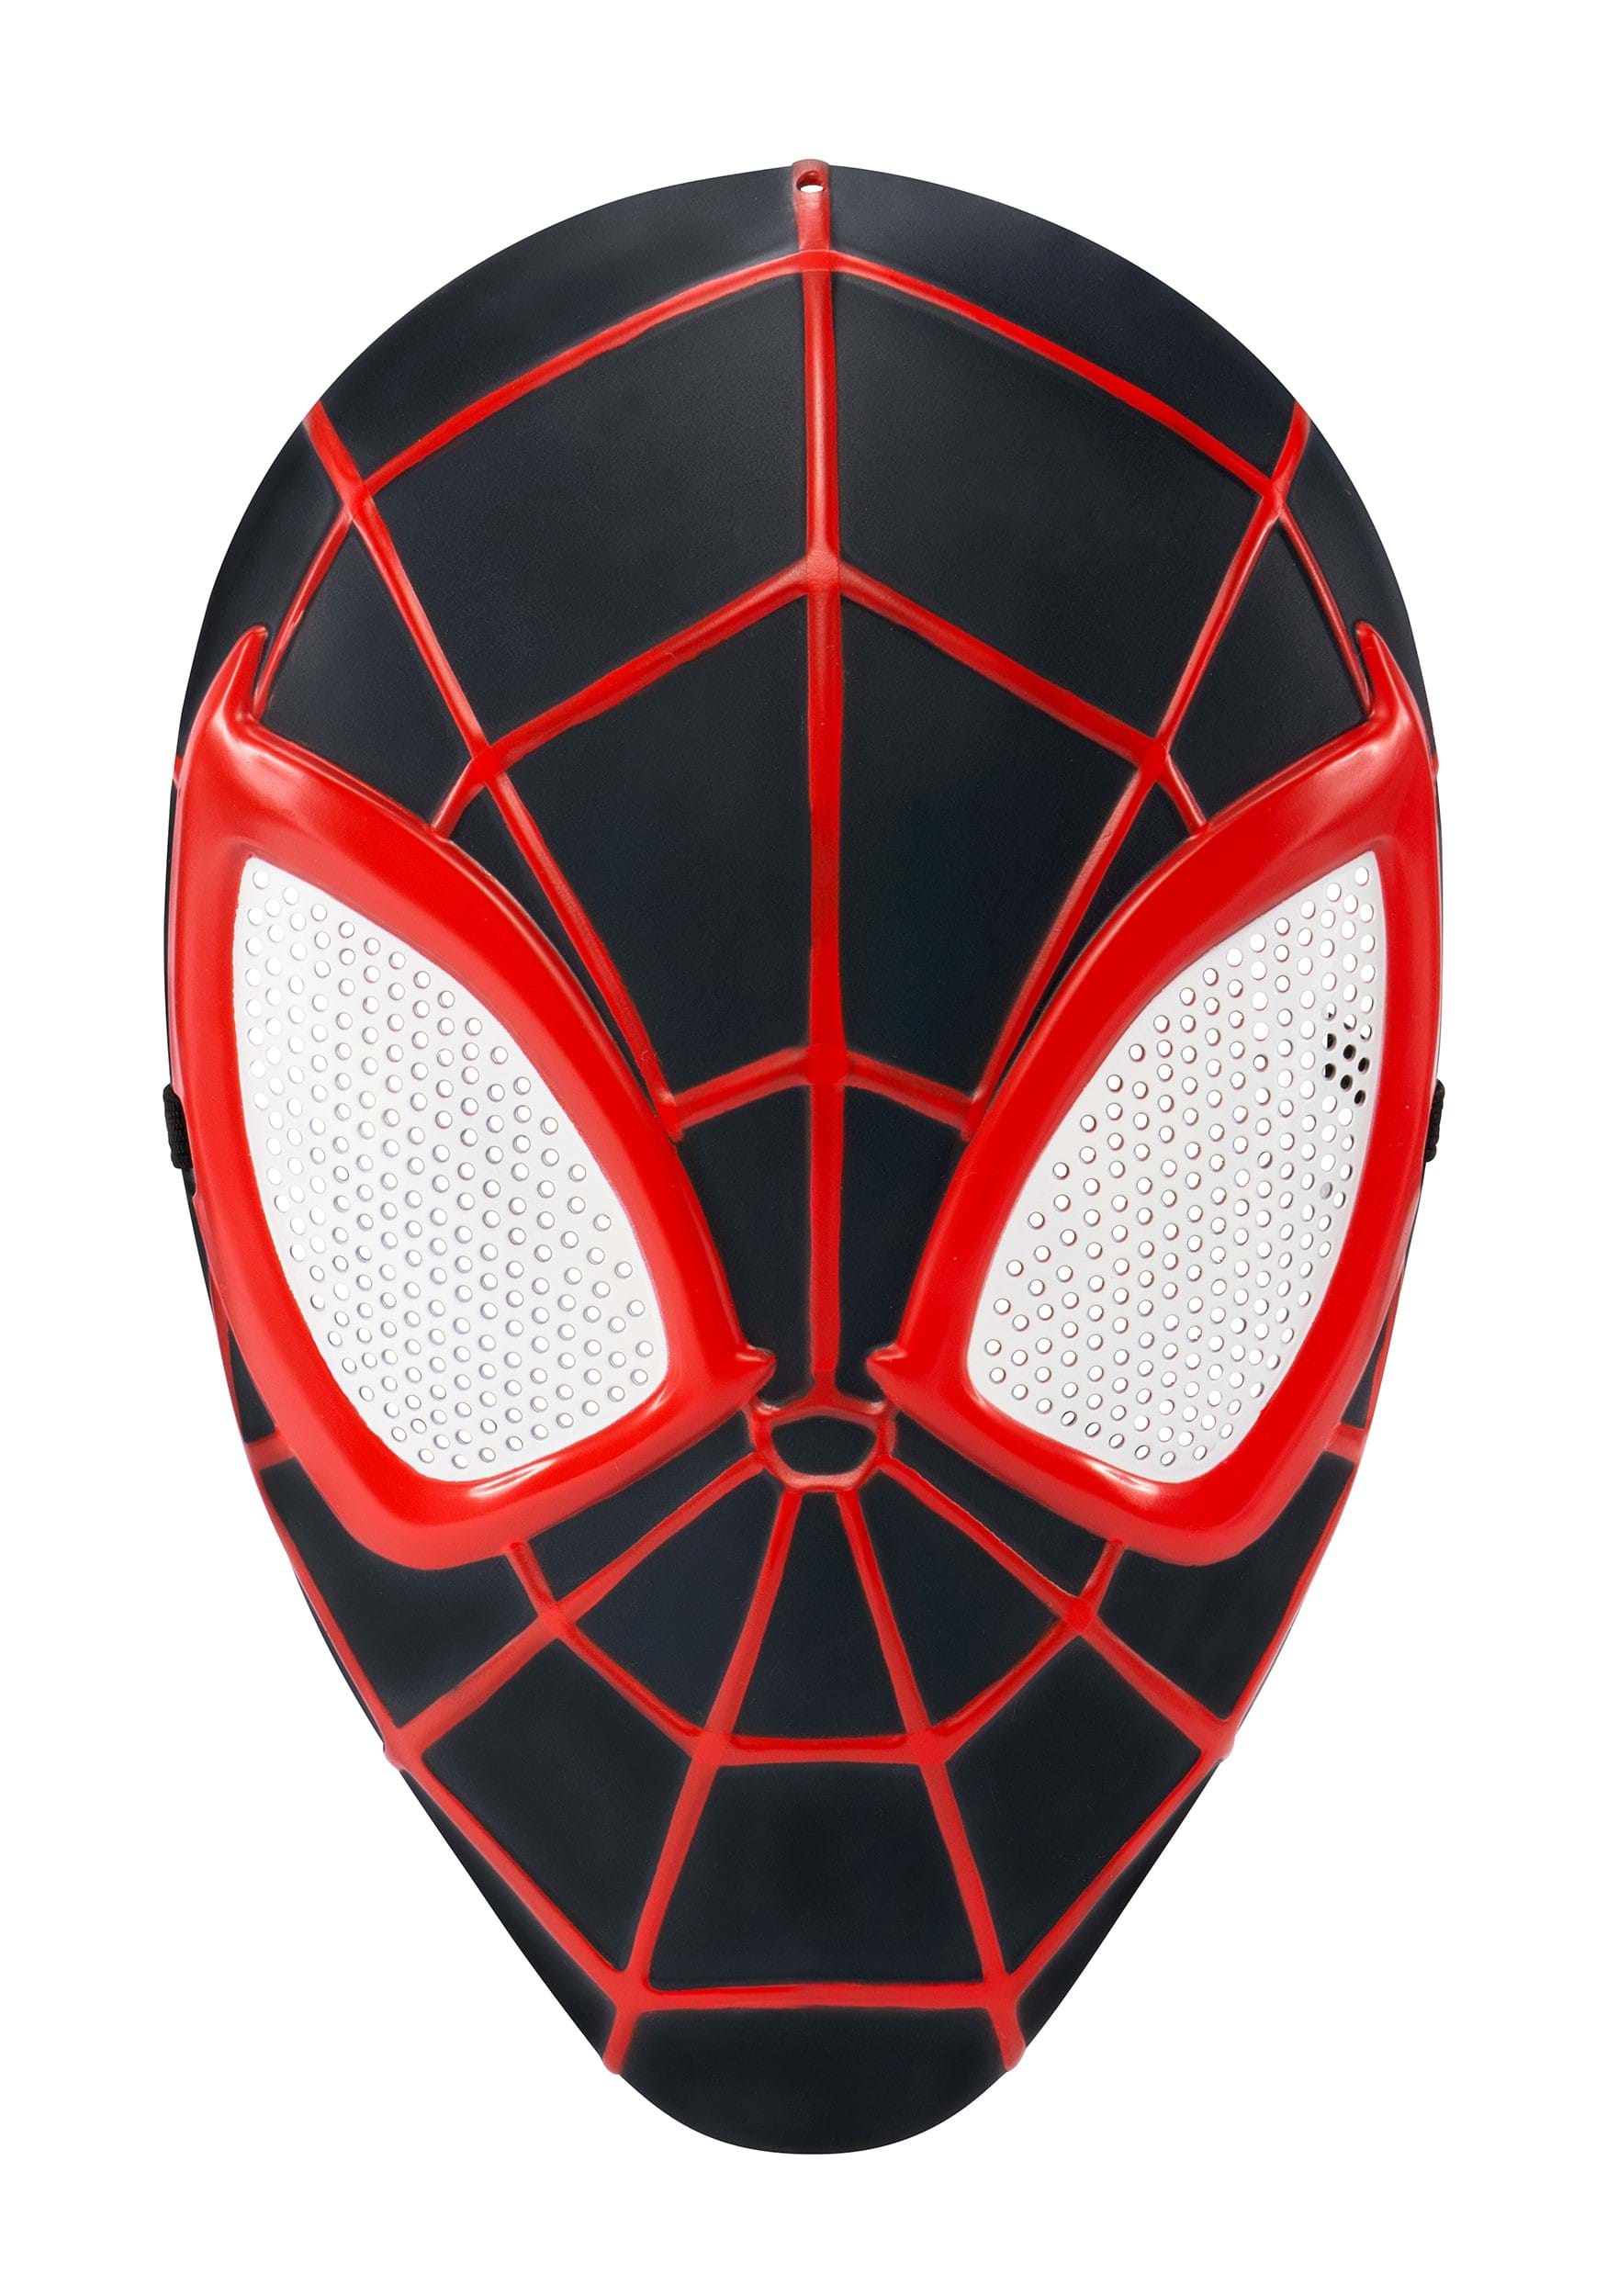 Costume Miles Morales enfant Spiderman Across The Spider Verse